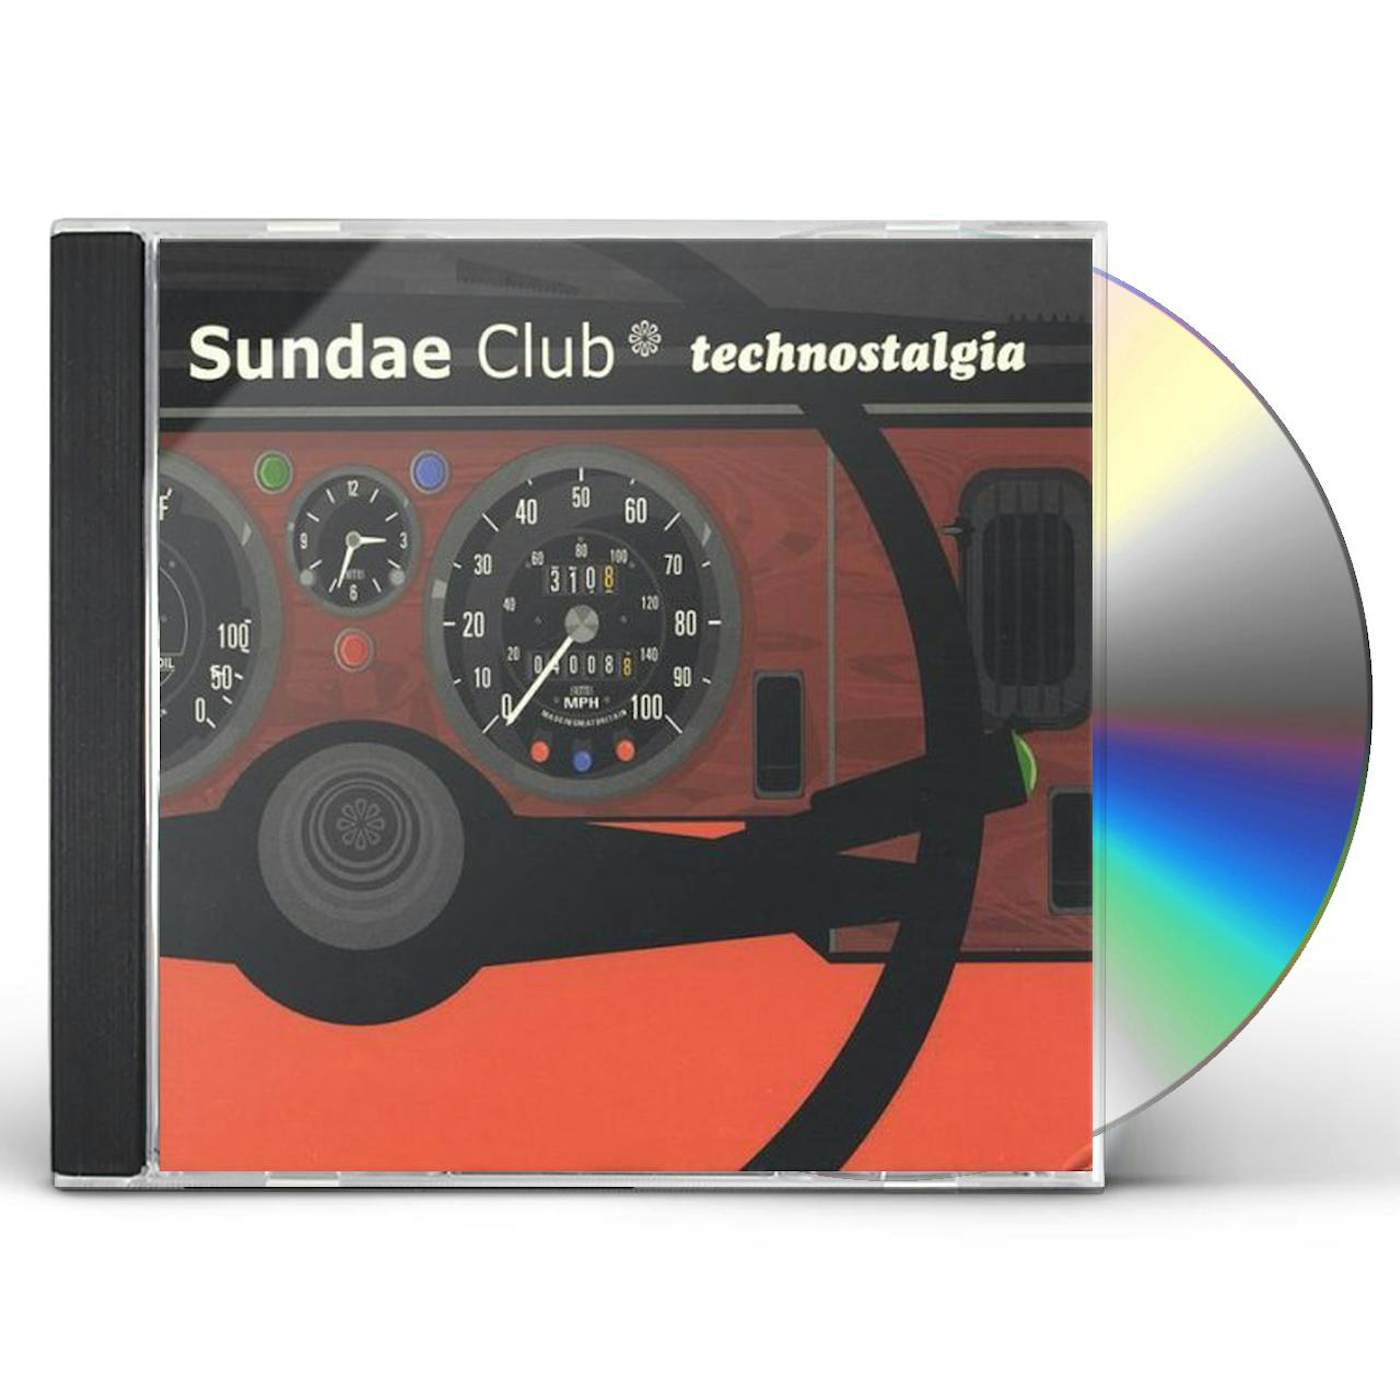 Sundae Club TECHNOSTALGIA CD